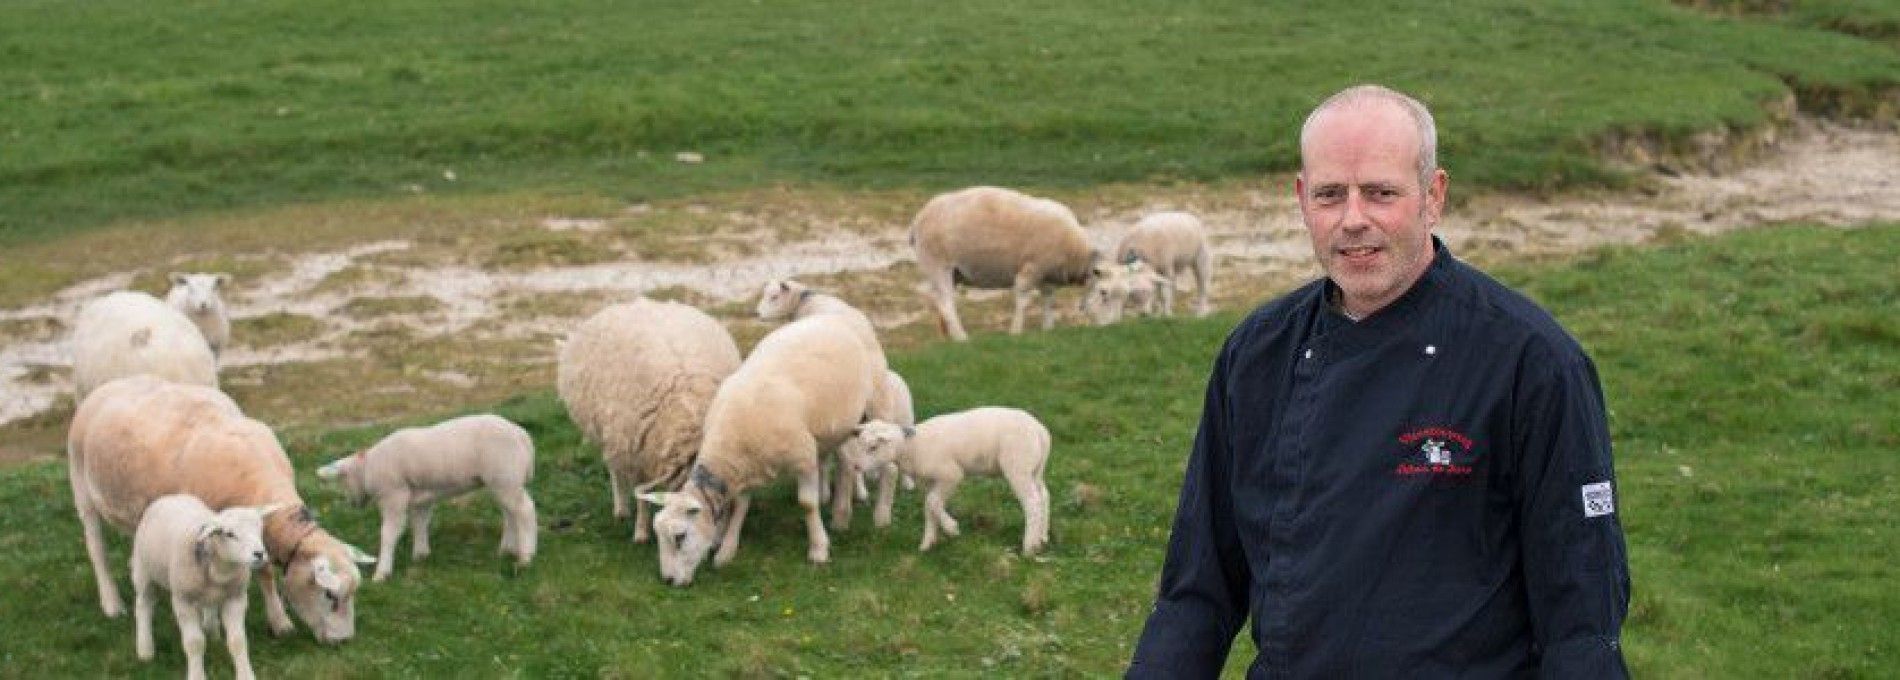 Amelander lamsvlees - Johan de Jong